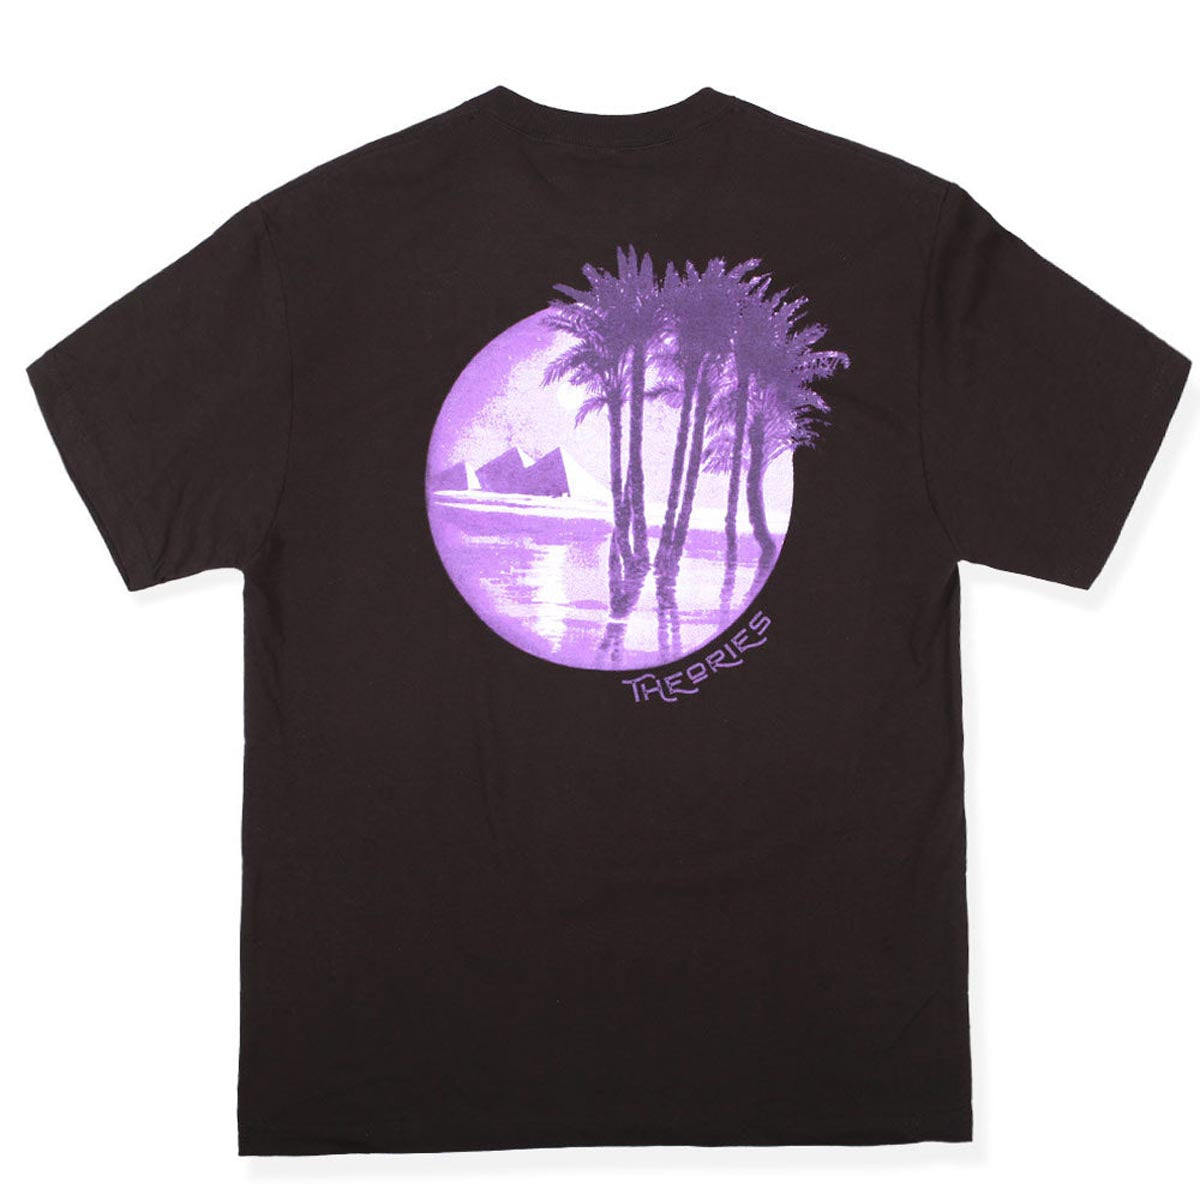 Theories Oasis T-Shirt - Black image 1